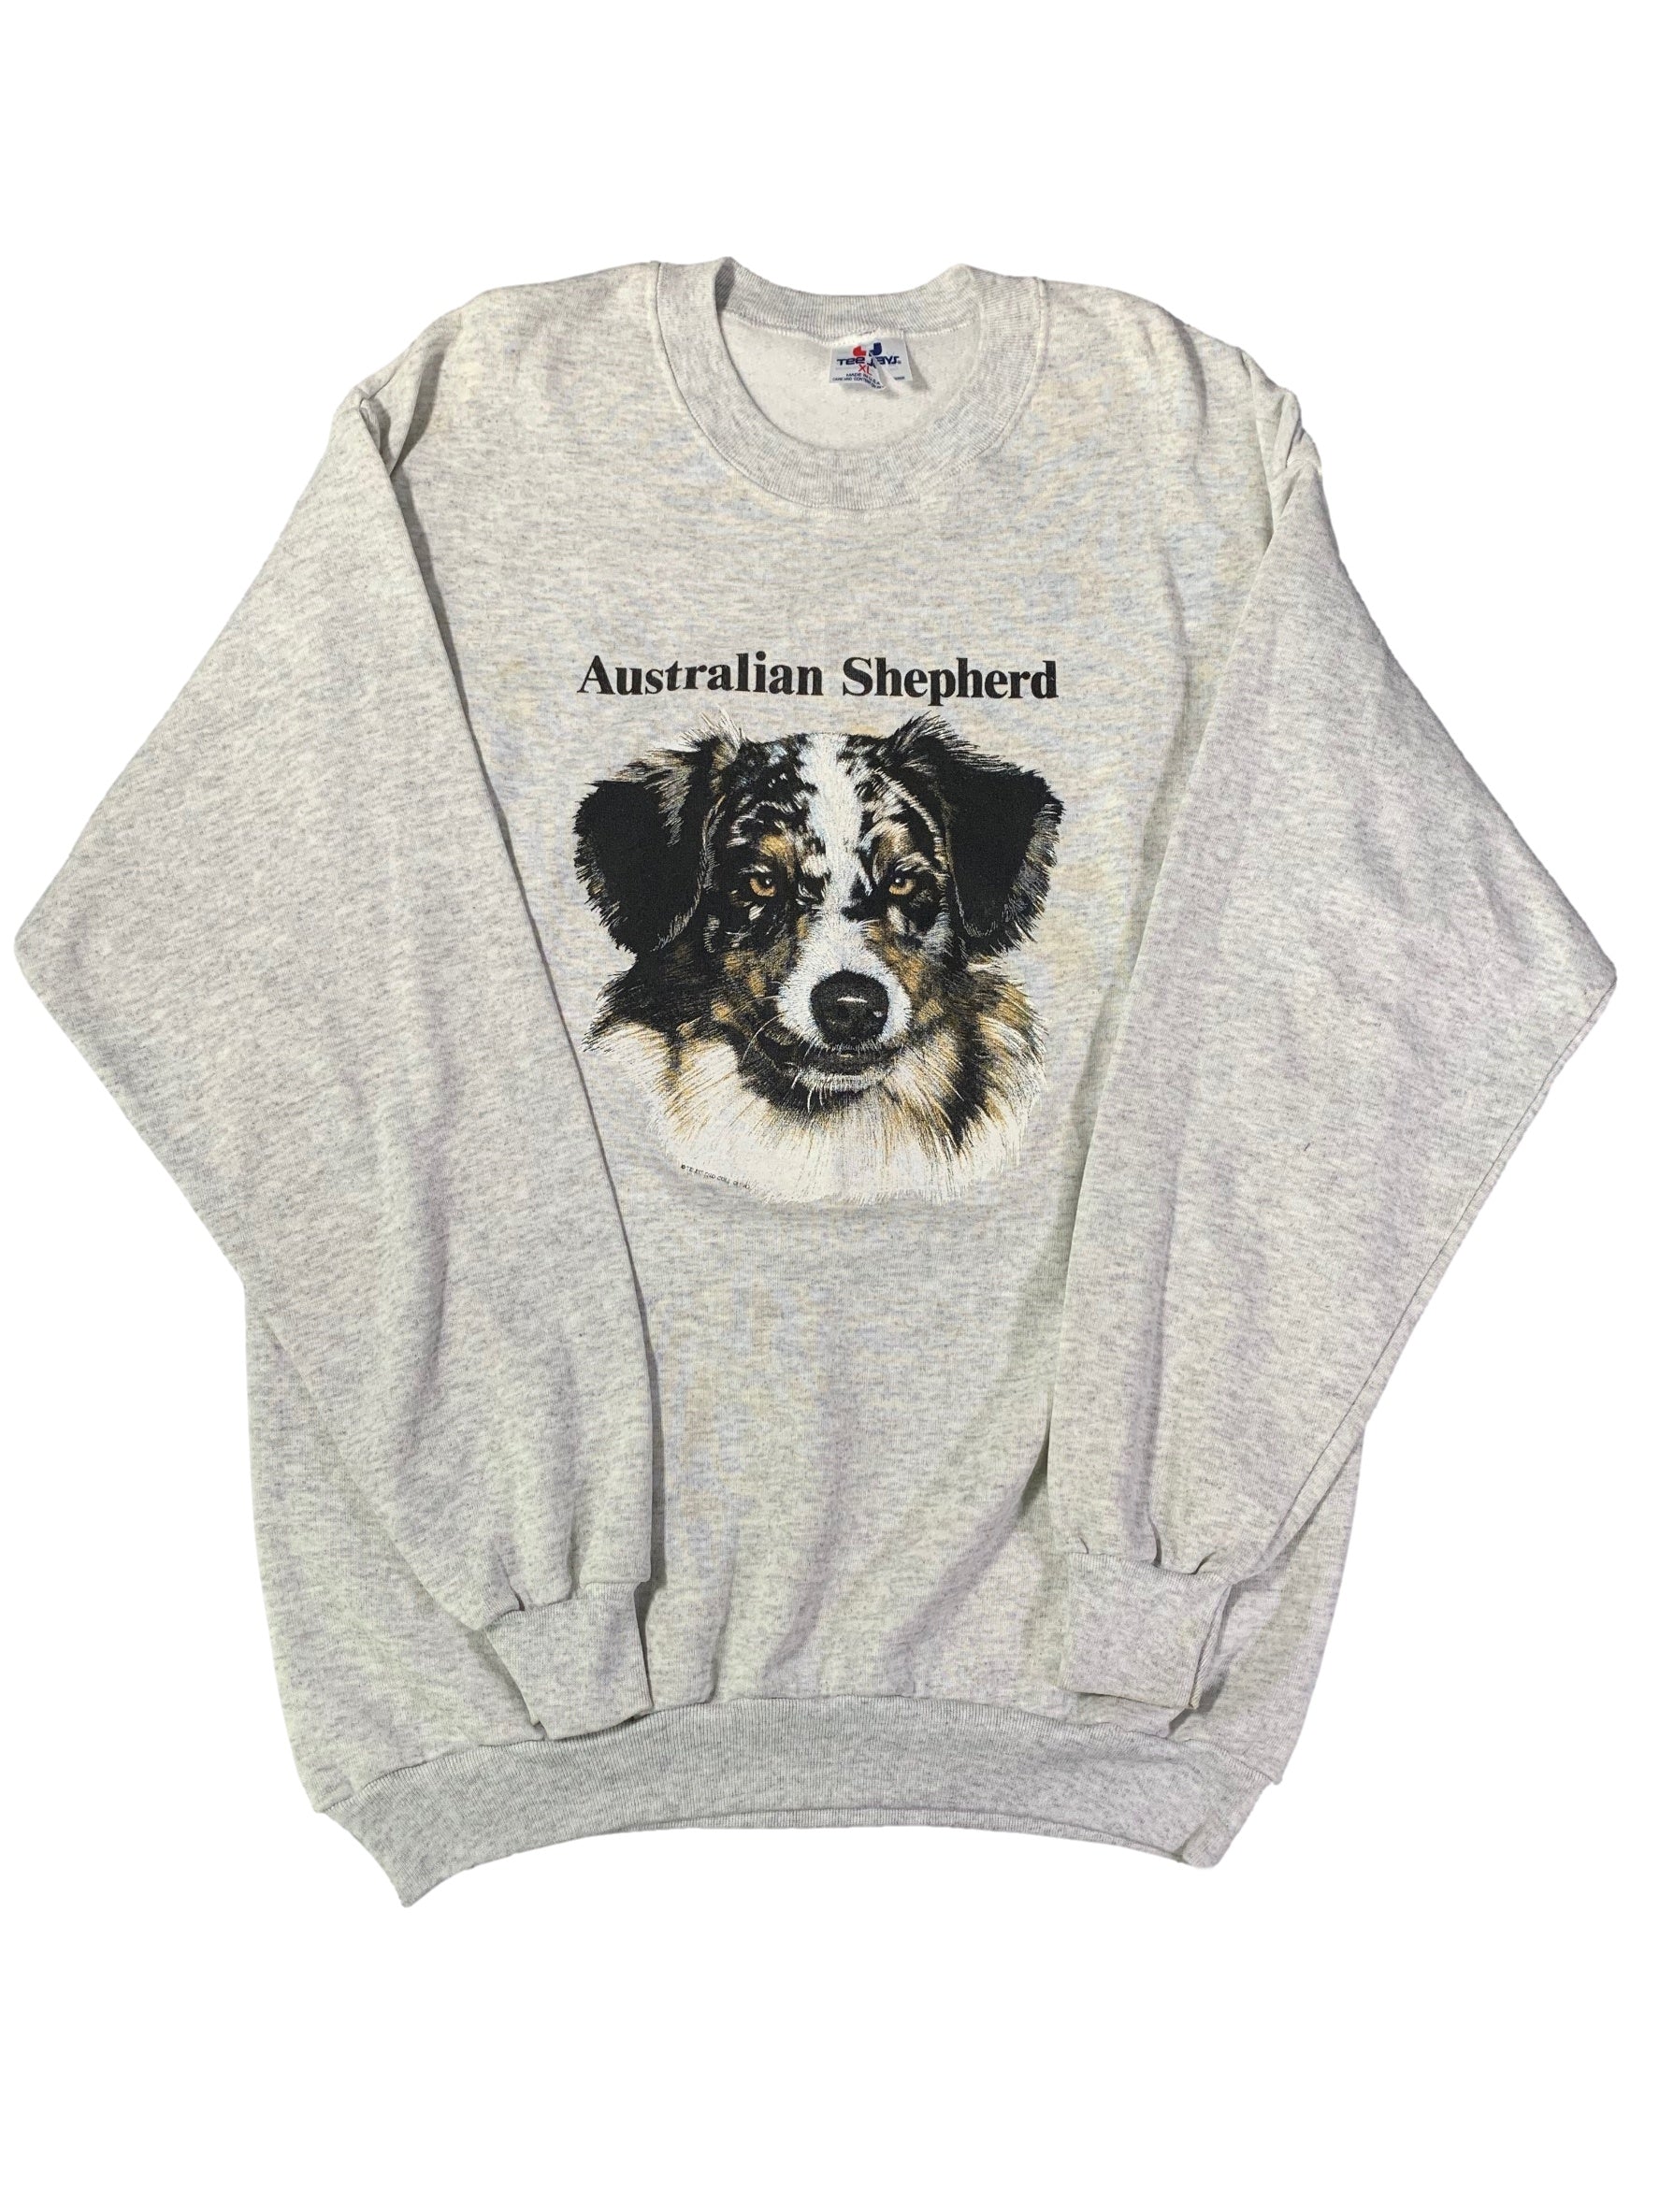 Vintage Australian Shepard "Portrait" Crewneck Sweatshirt - jointcustodydc